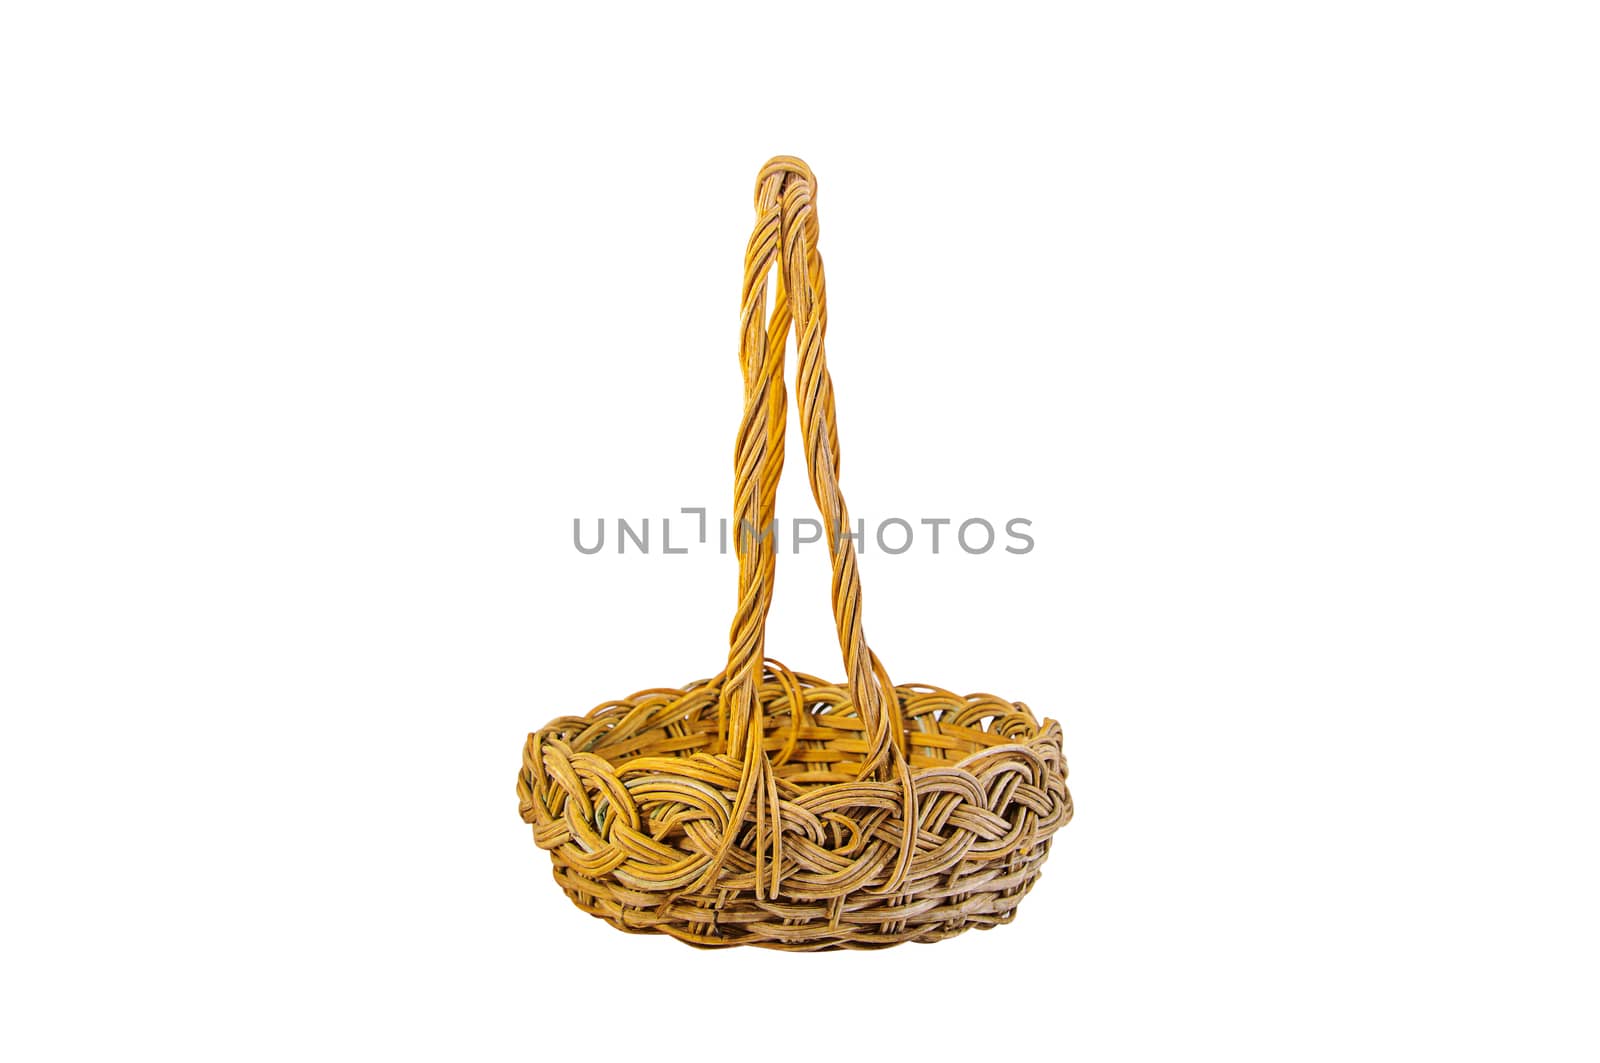 Empty wicker basket by NuwatPhoto